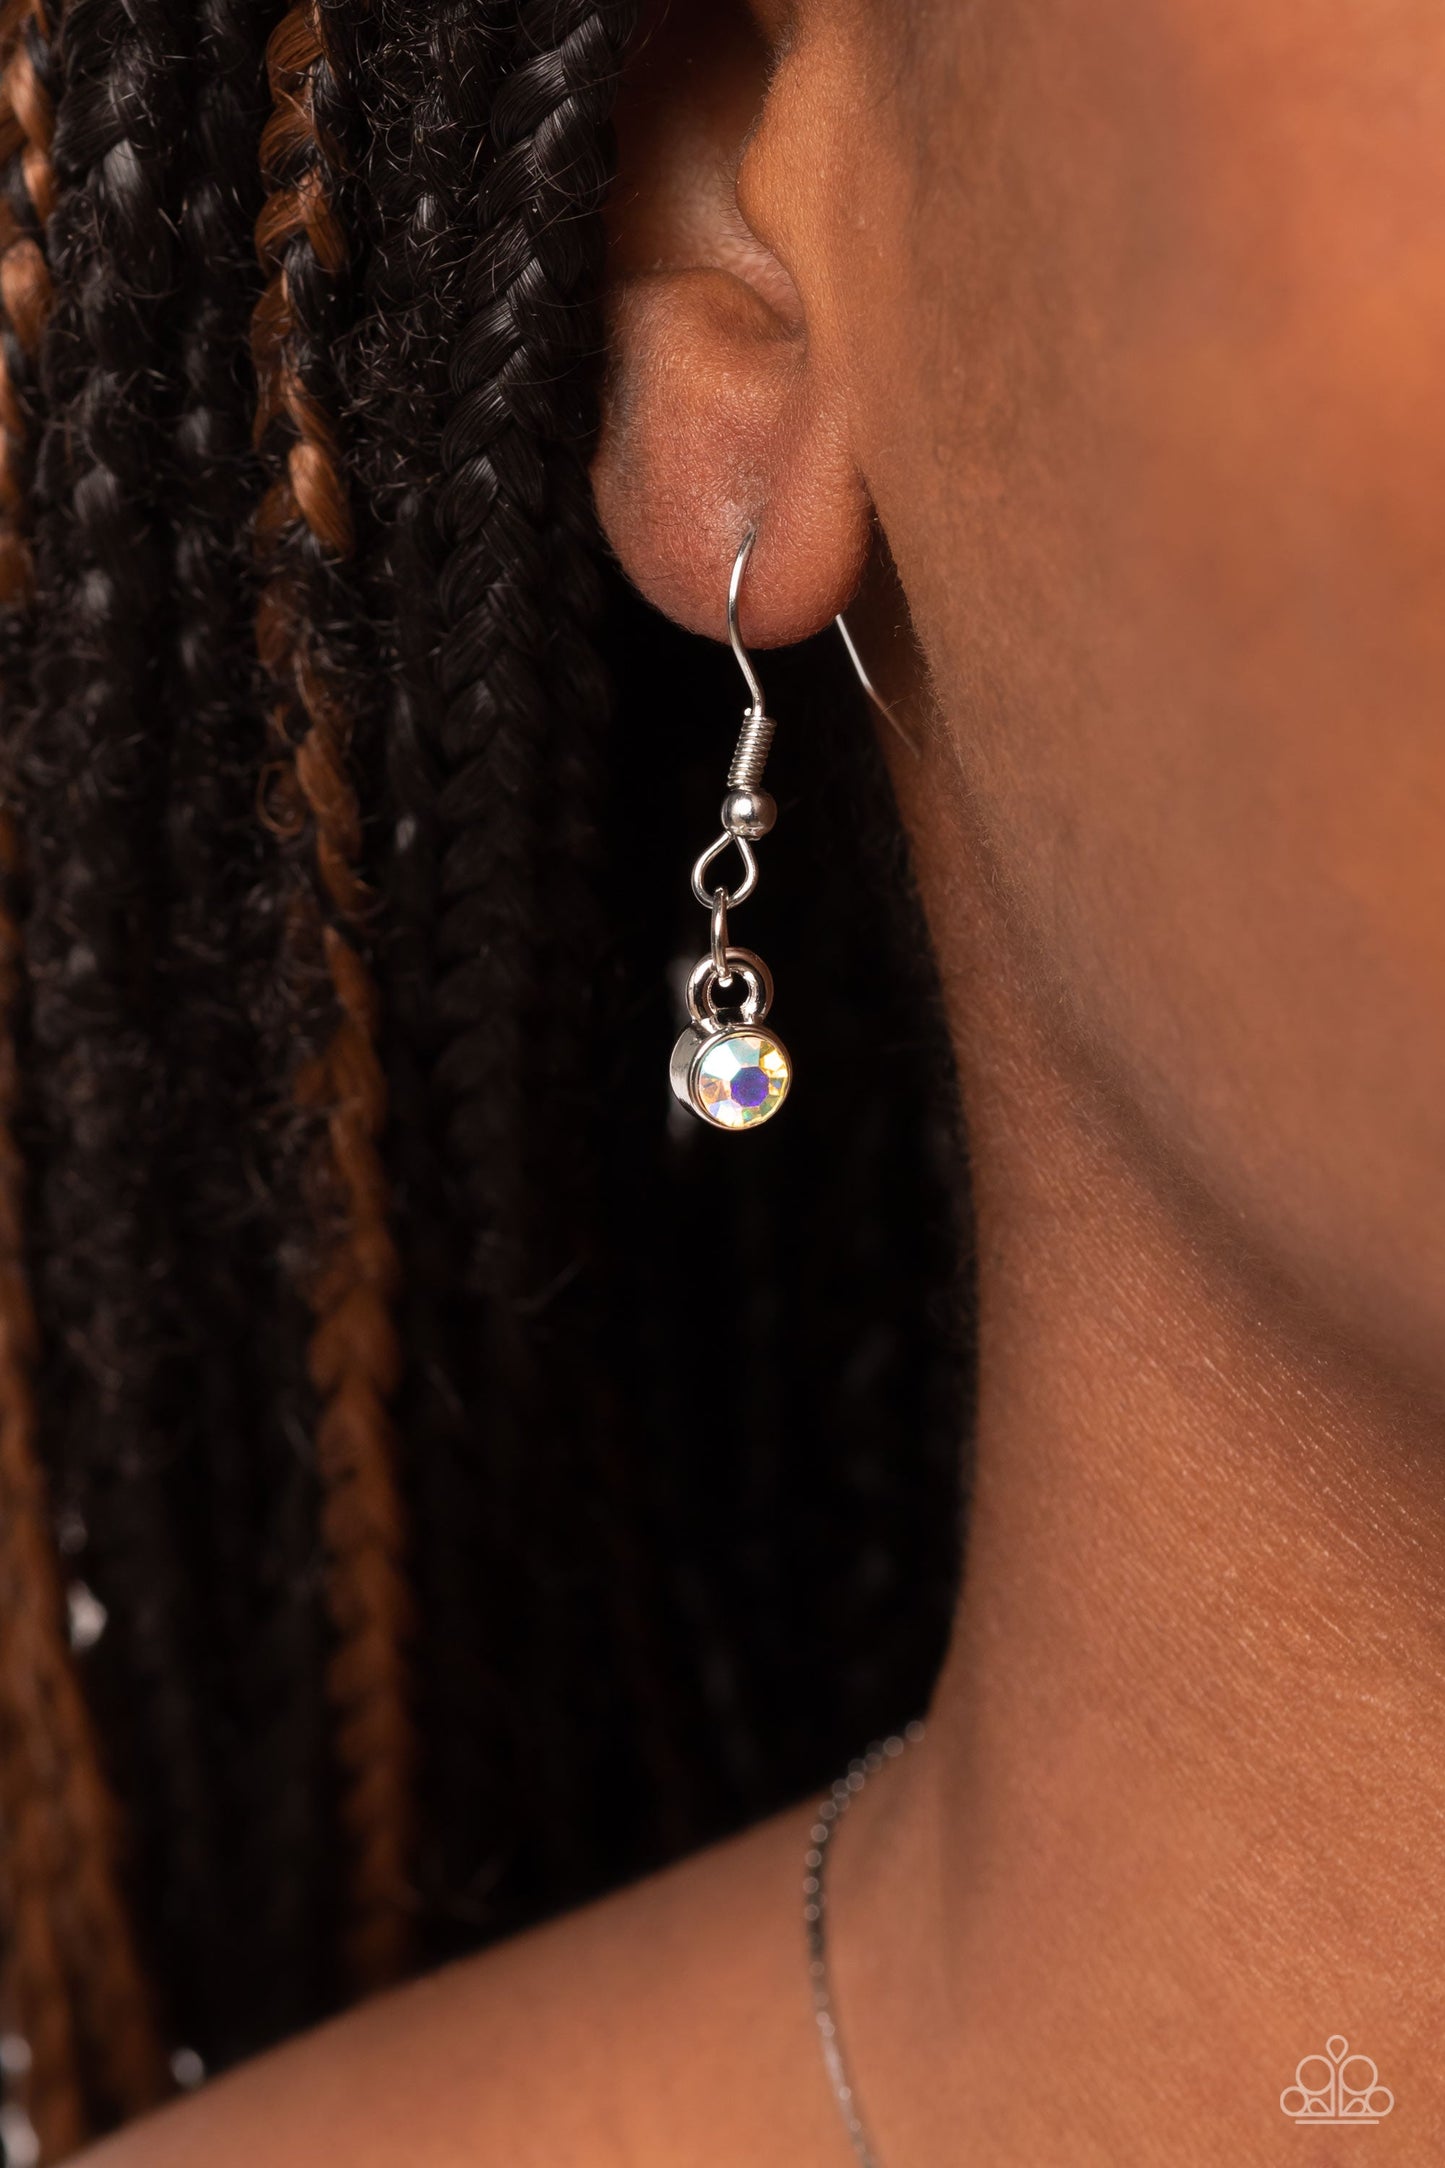 LOVE-Locked - Multi Iridescent Rhinestone Key Pendant Paparazzi Necklace & matching earrings